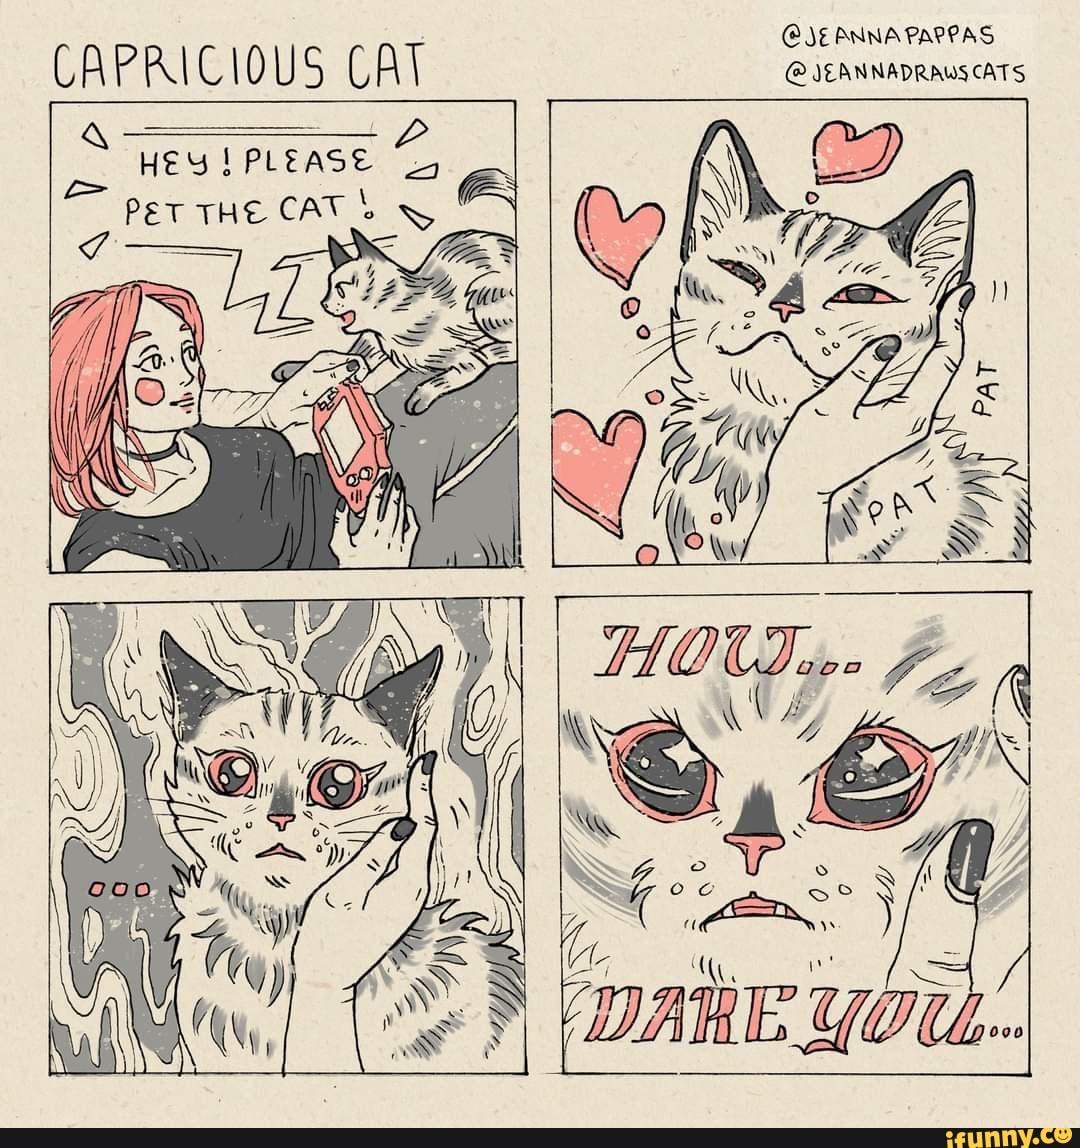 Pet please. Комиксы с котиками. Комикс гладить кота. Комикс про гладящегося котика. Приложения для рисования комиксов котиков.